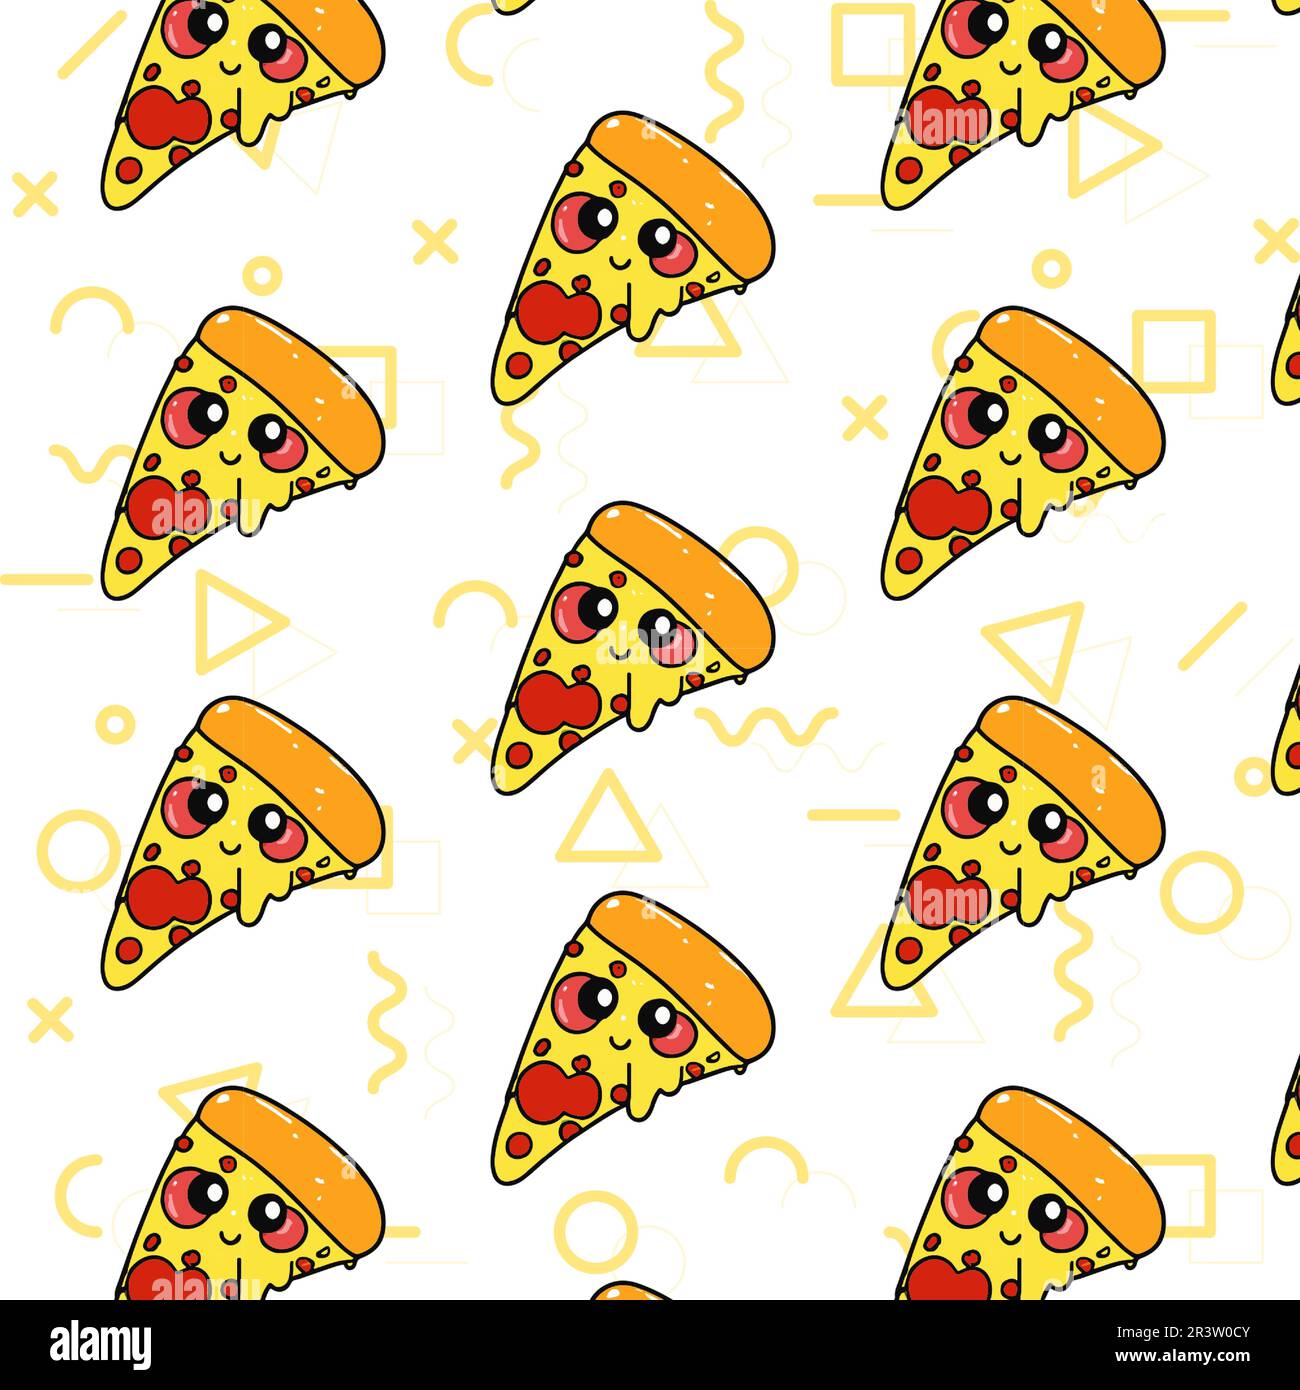 Seamless pizza pattern. Hand drawn pizza illustrations. Vector illustration. Stock Vector